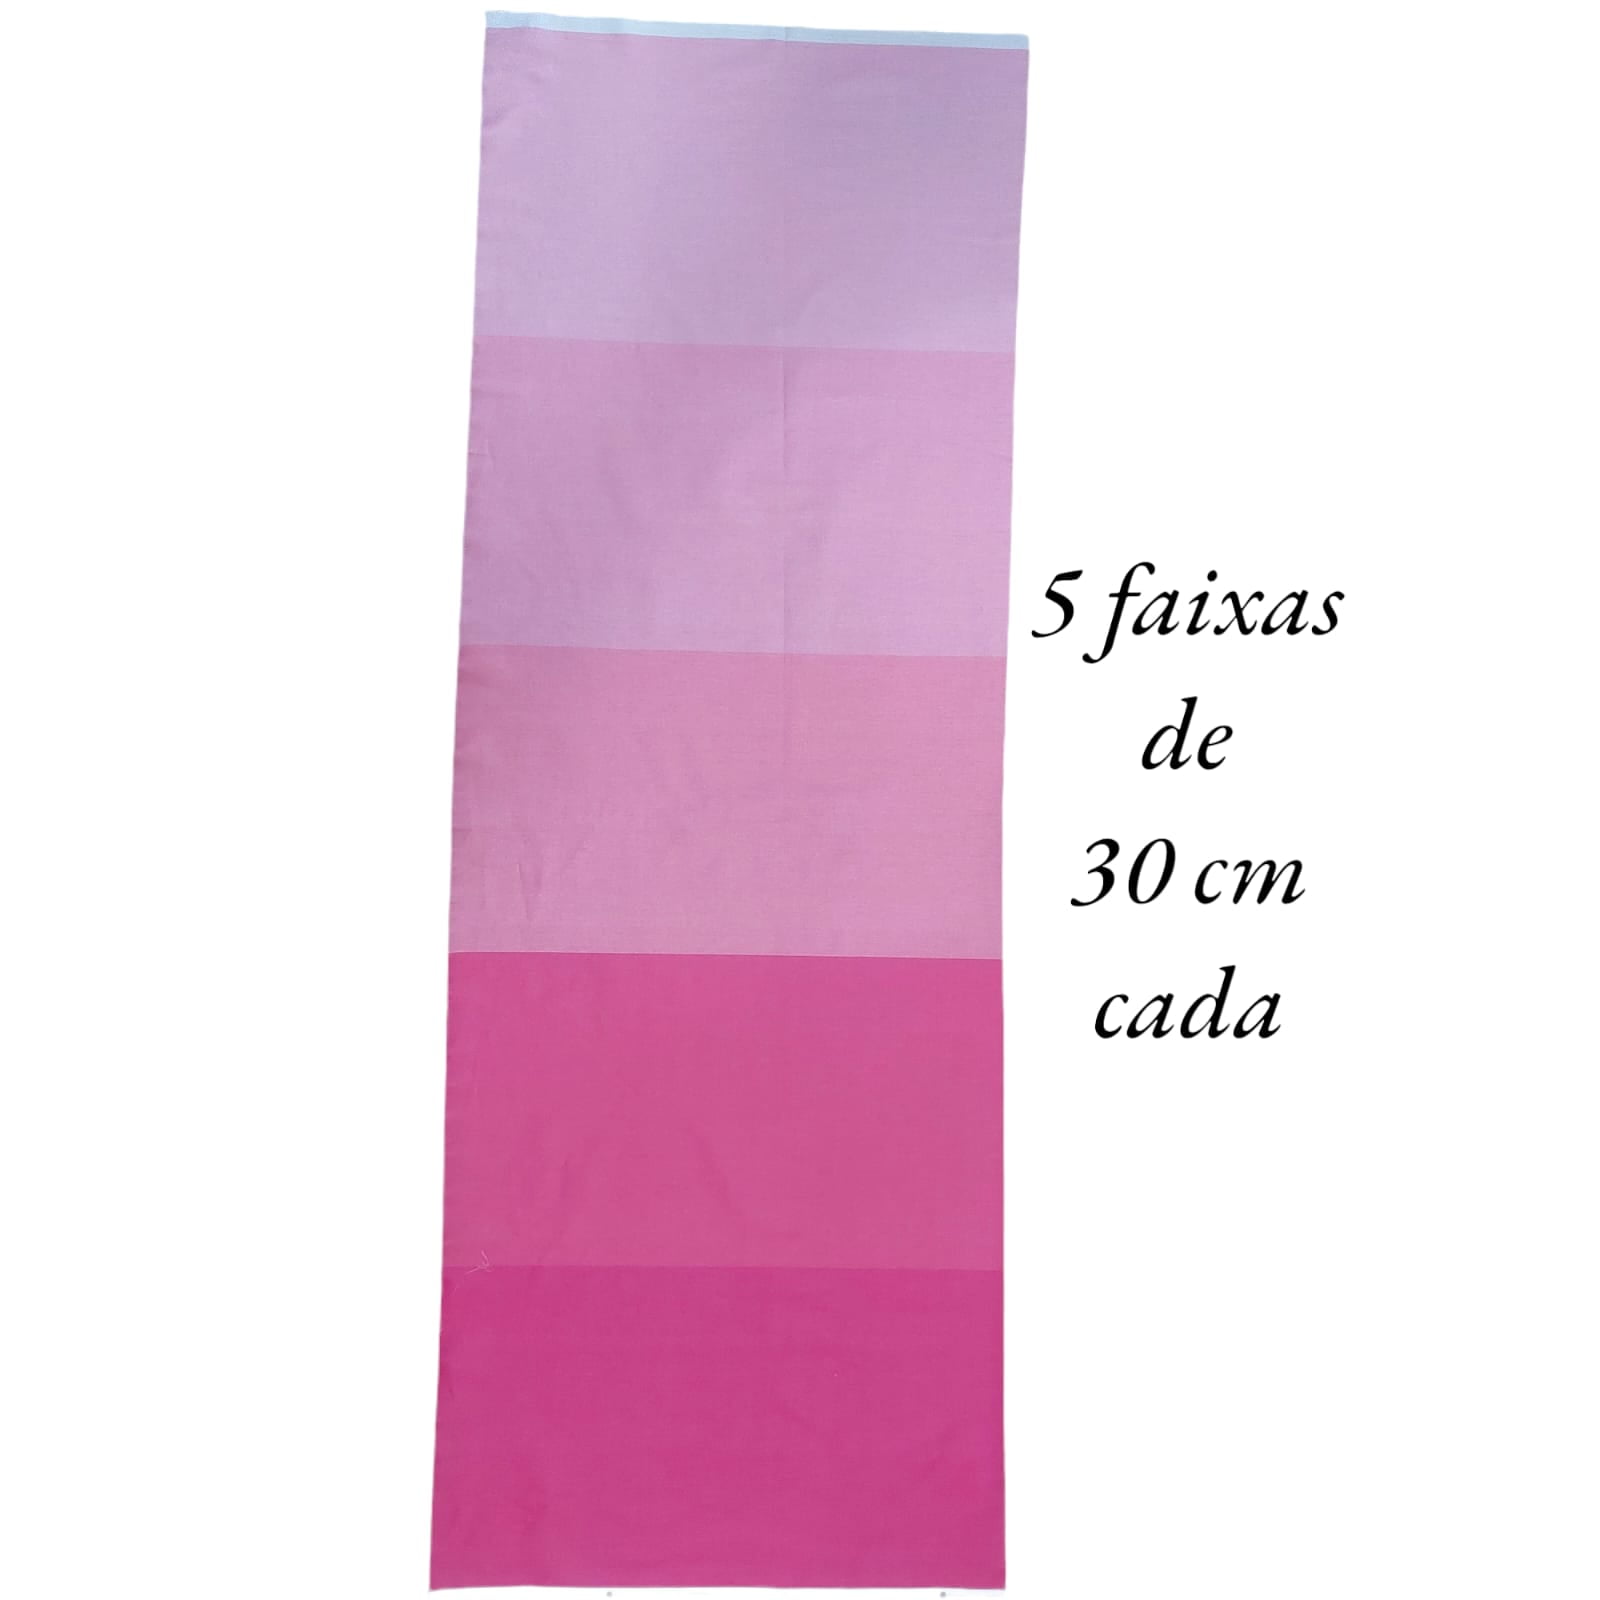 Tecido Tricoline digital - textura rosa pink degradê - Col. Basics for All - Fernando Maluhy  (50x1,50 cm)                            